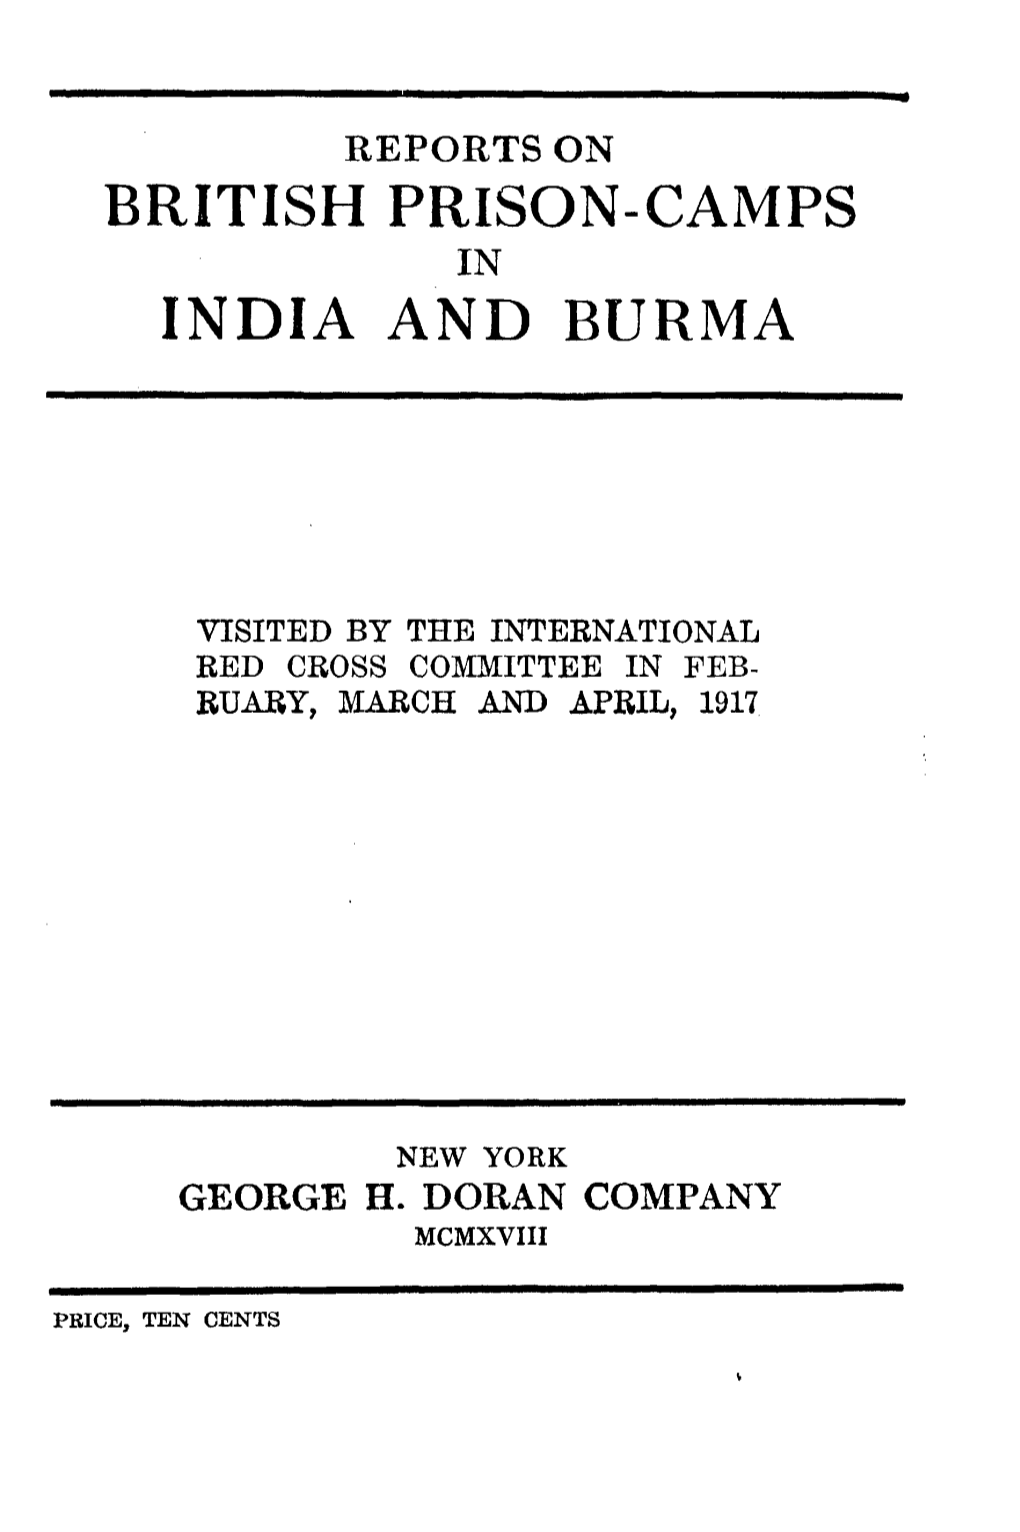 British Prison-Camps India and Burma